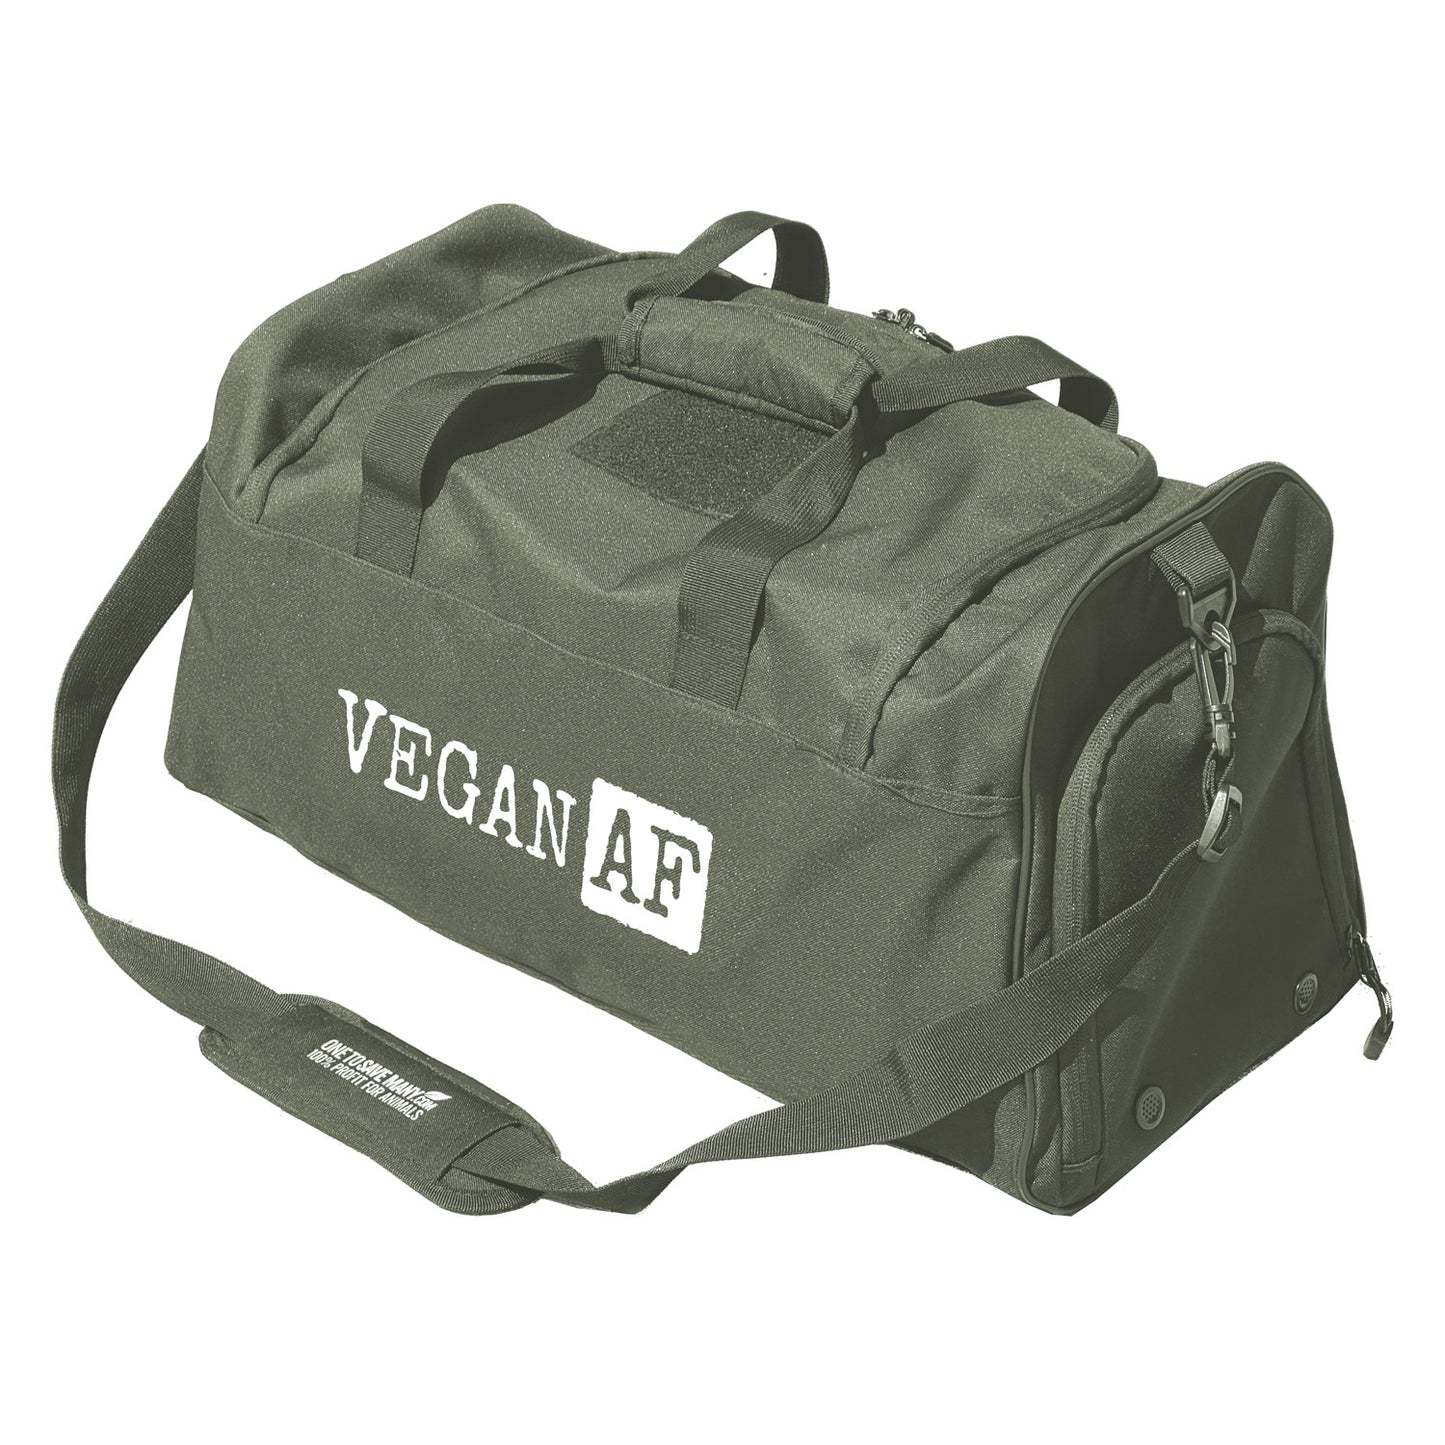 Vegan AF Gym Bag w/ Separate Shoe Storage - 3 Colors